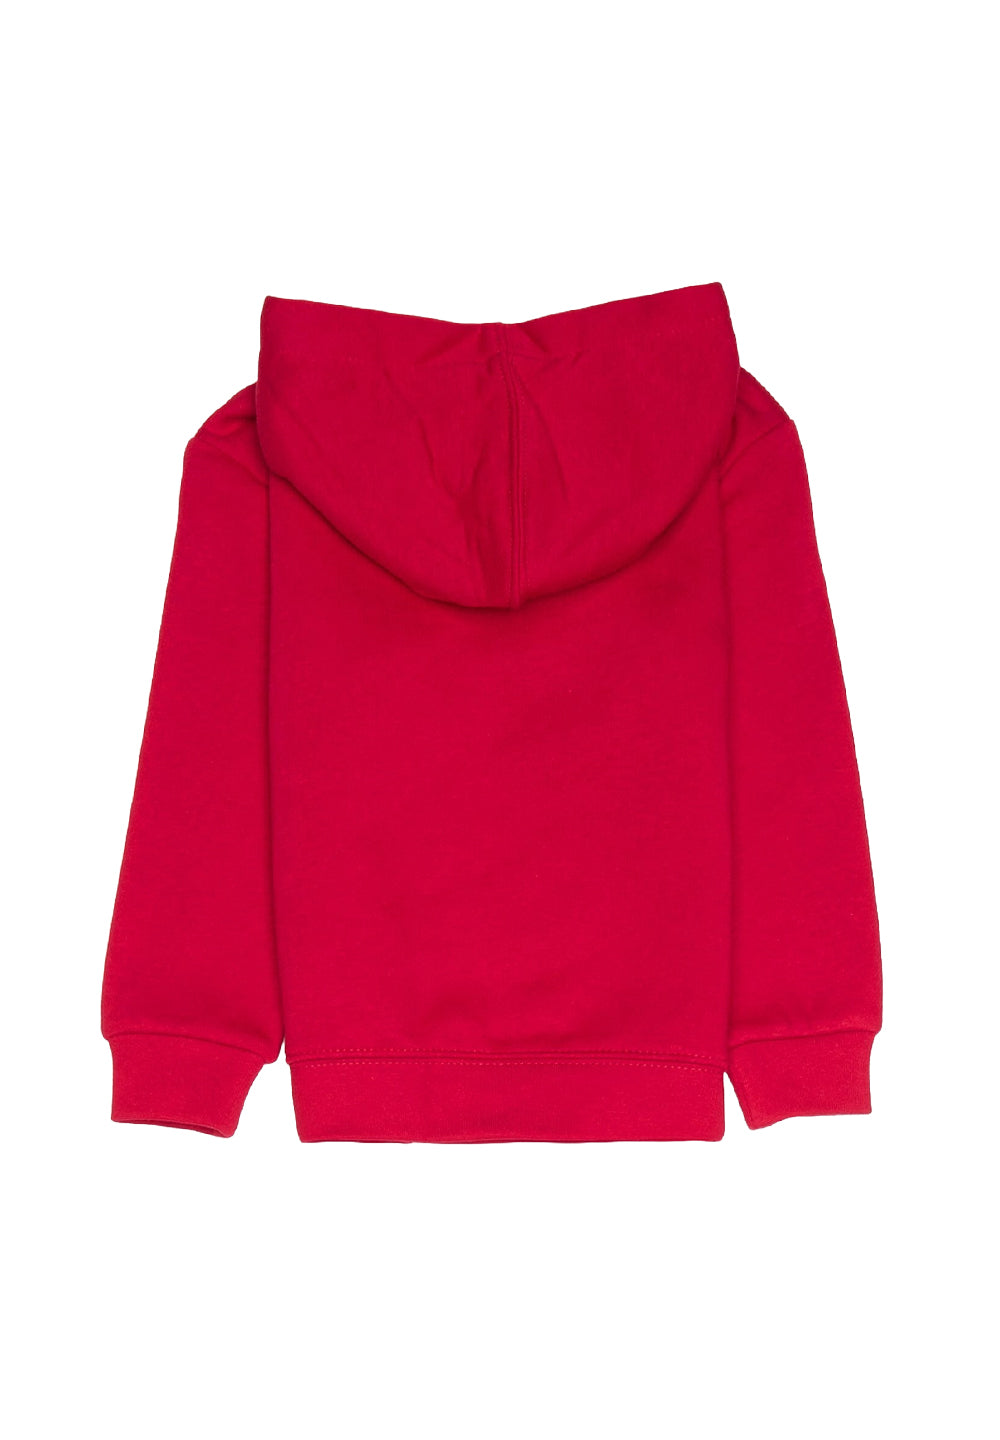 Red sweatshirt set for newborn